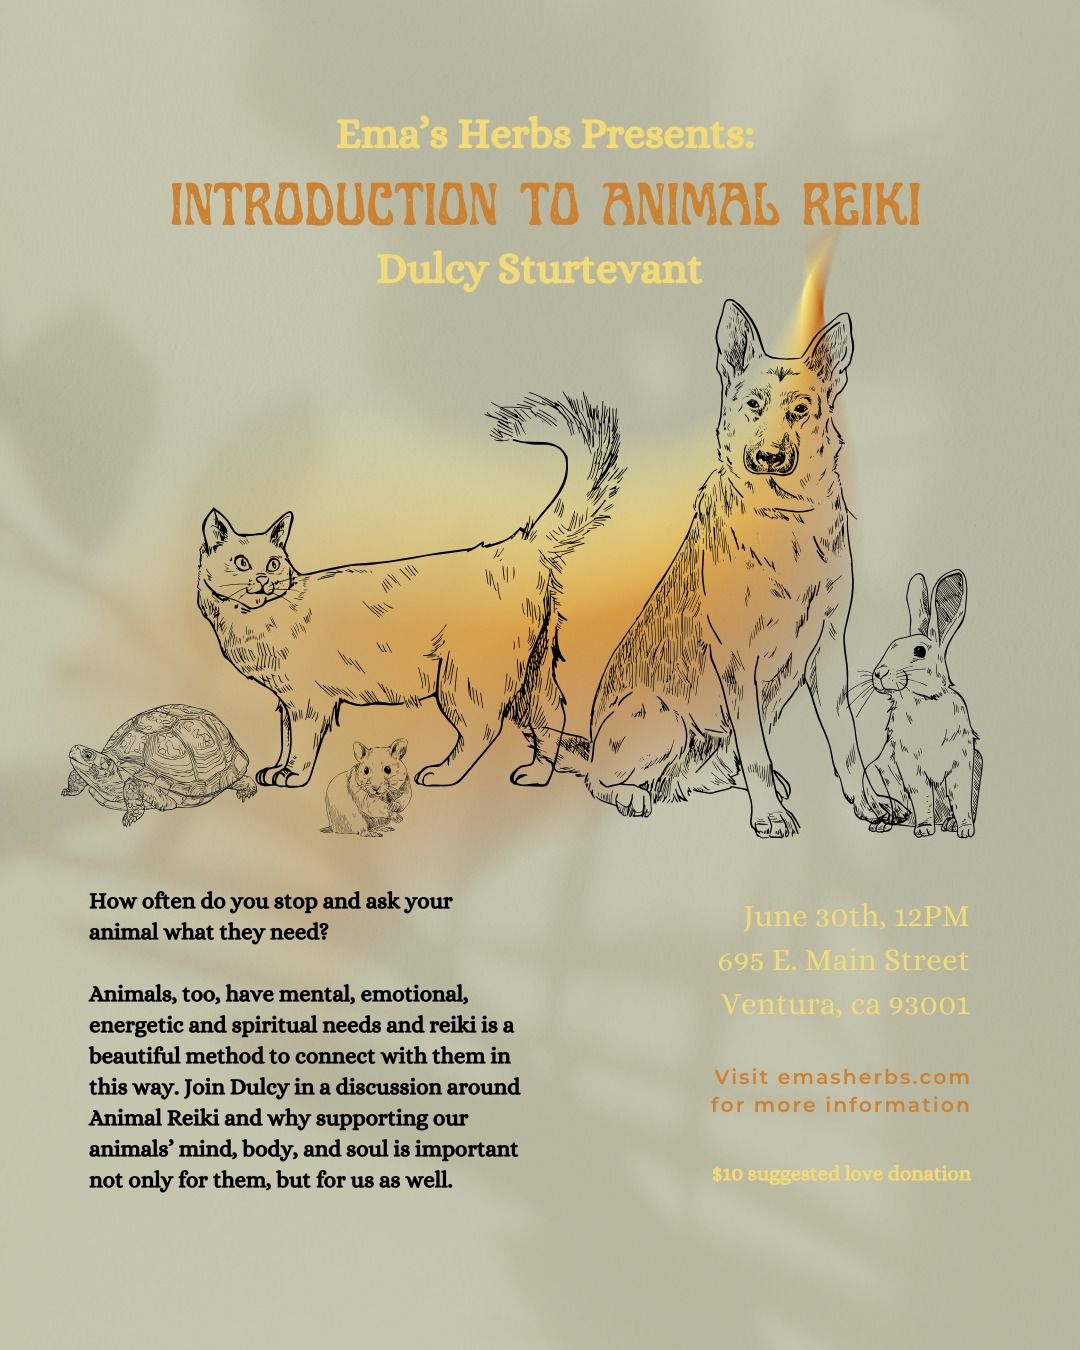 Introduction to Animal Reiki with Dulcy Sturtevant